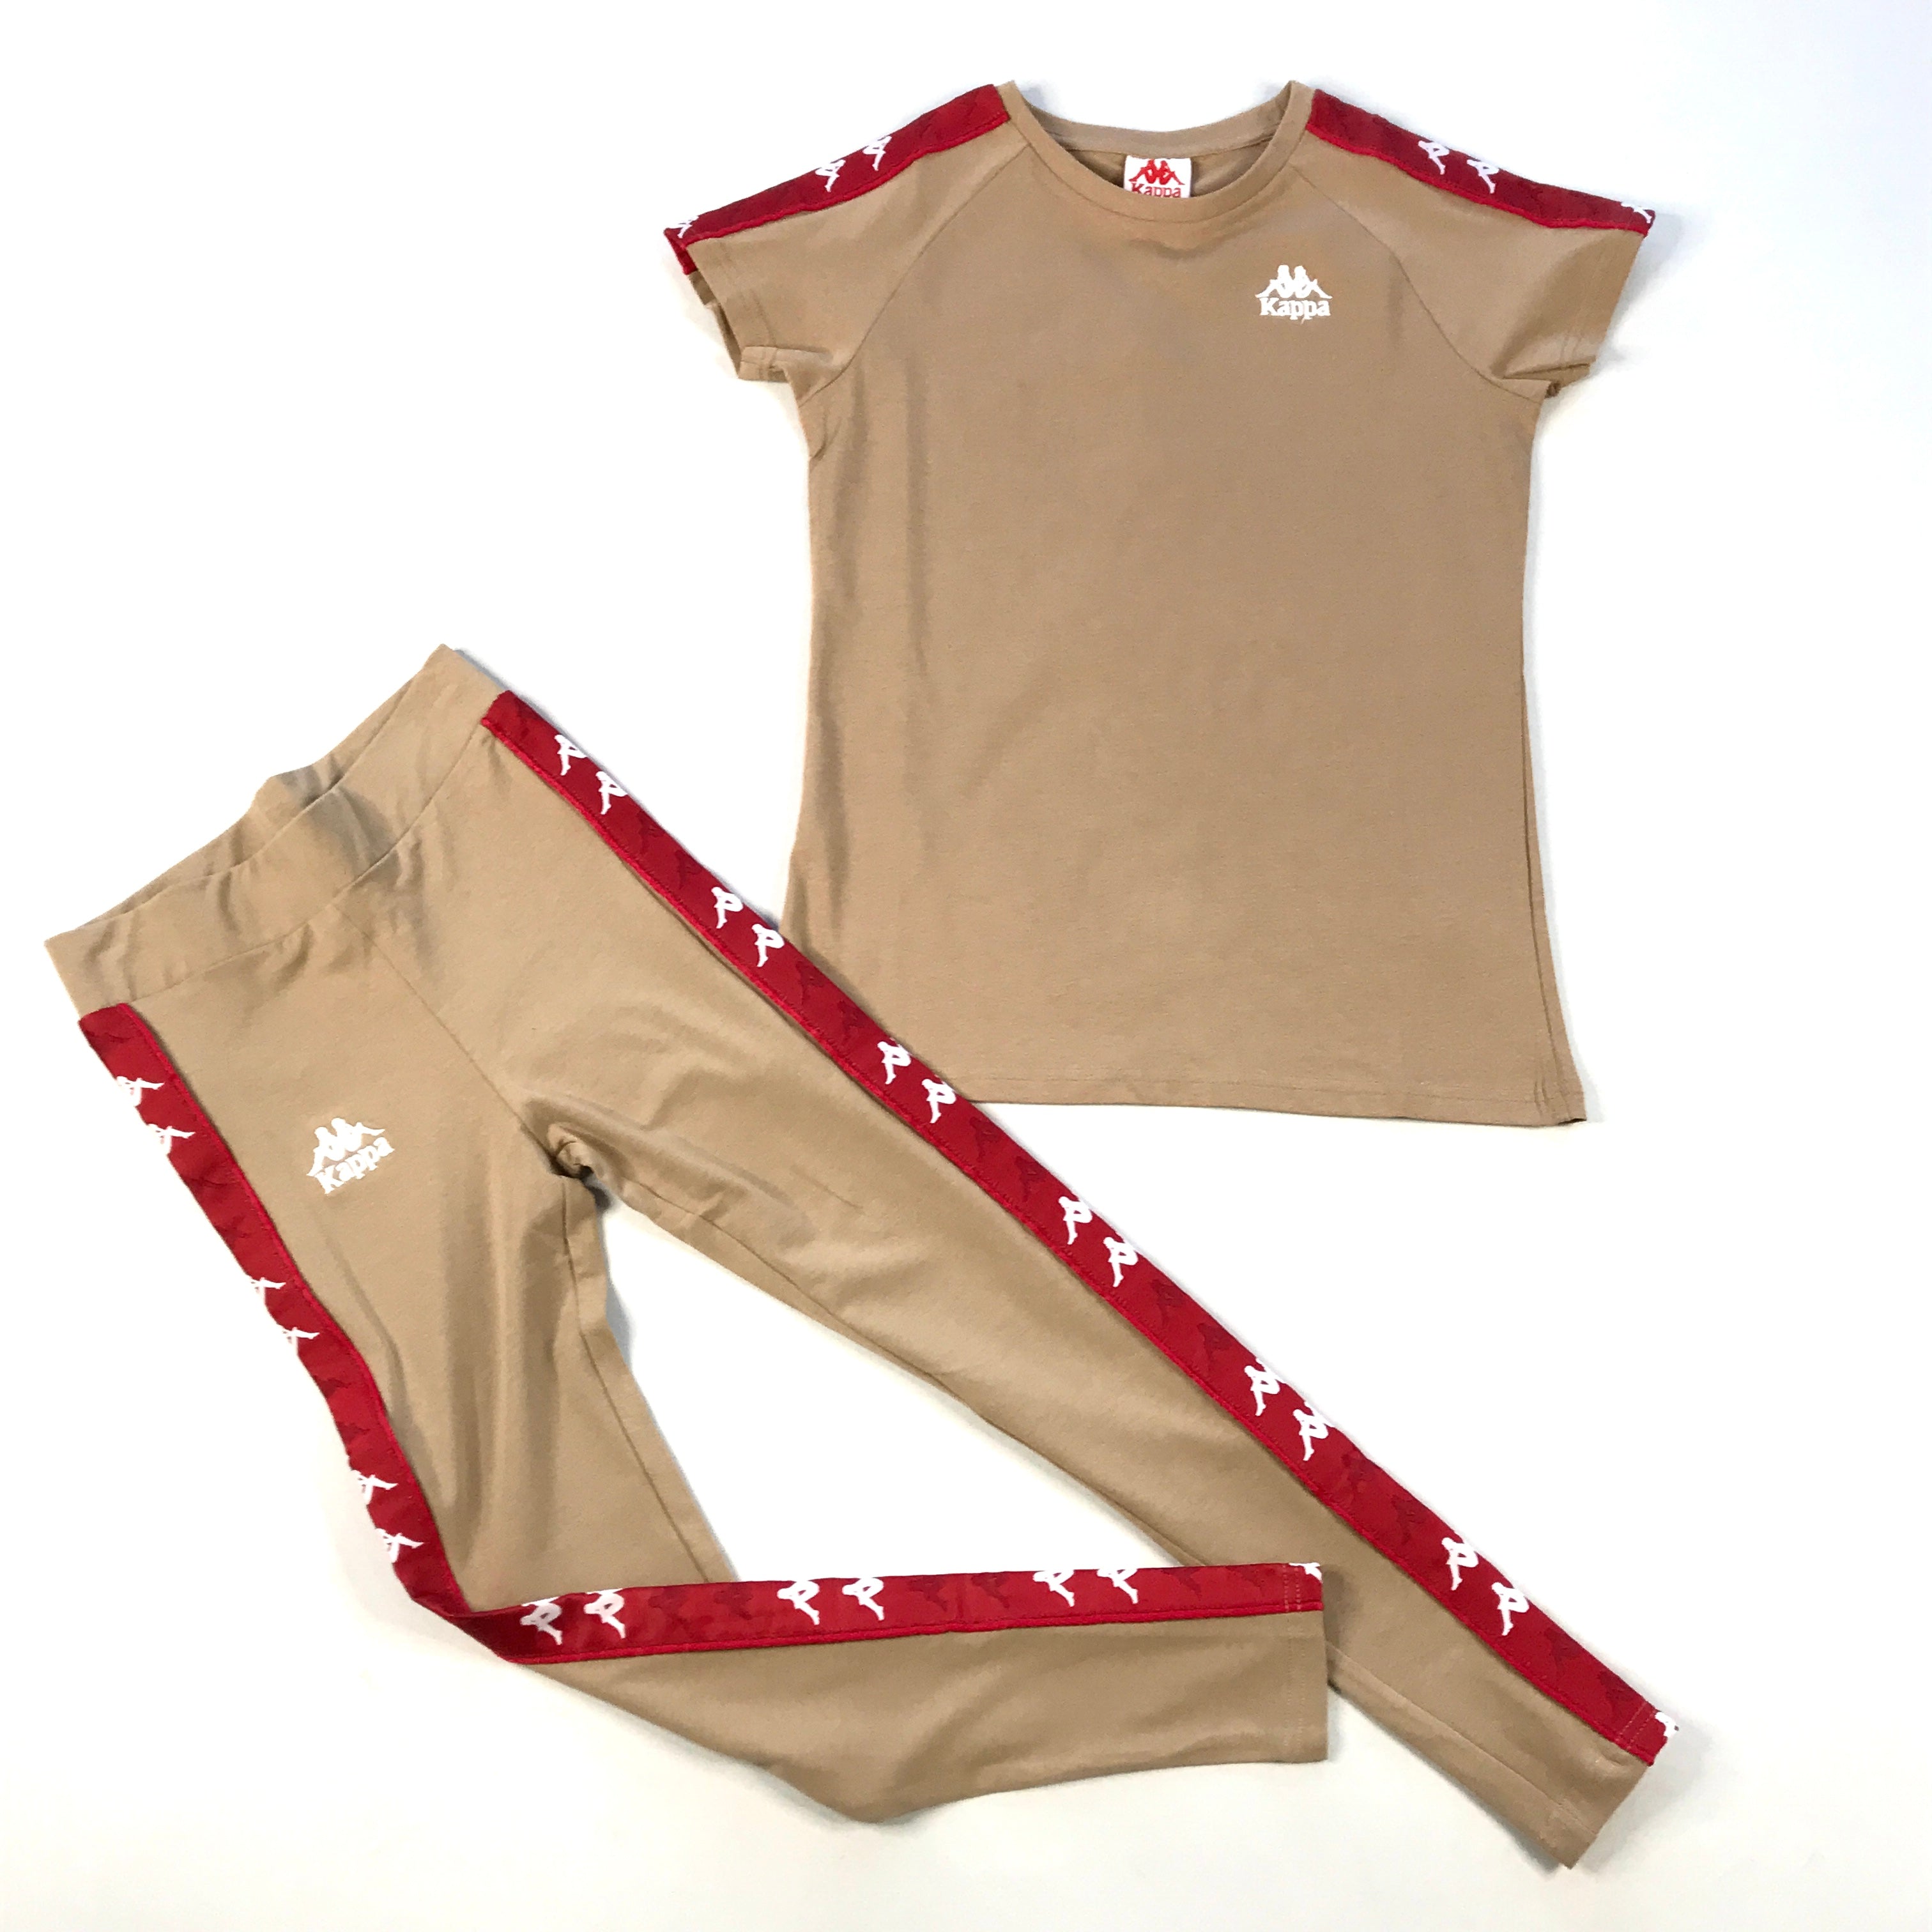 Kappa 222 Banda Bayamon tee-leggings in brown-md red-white